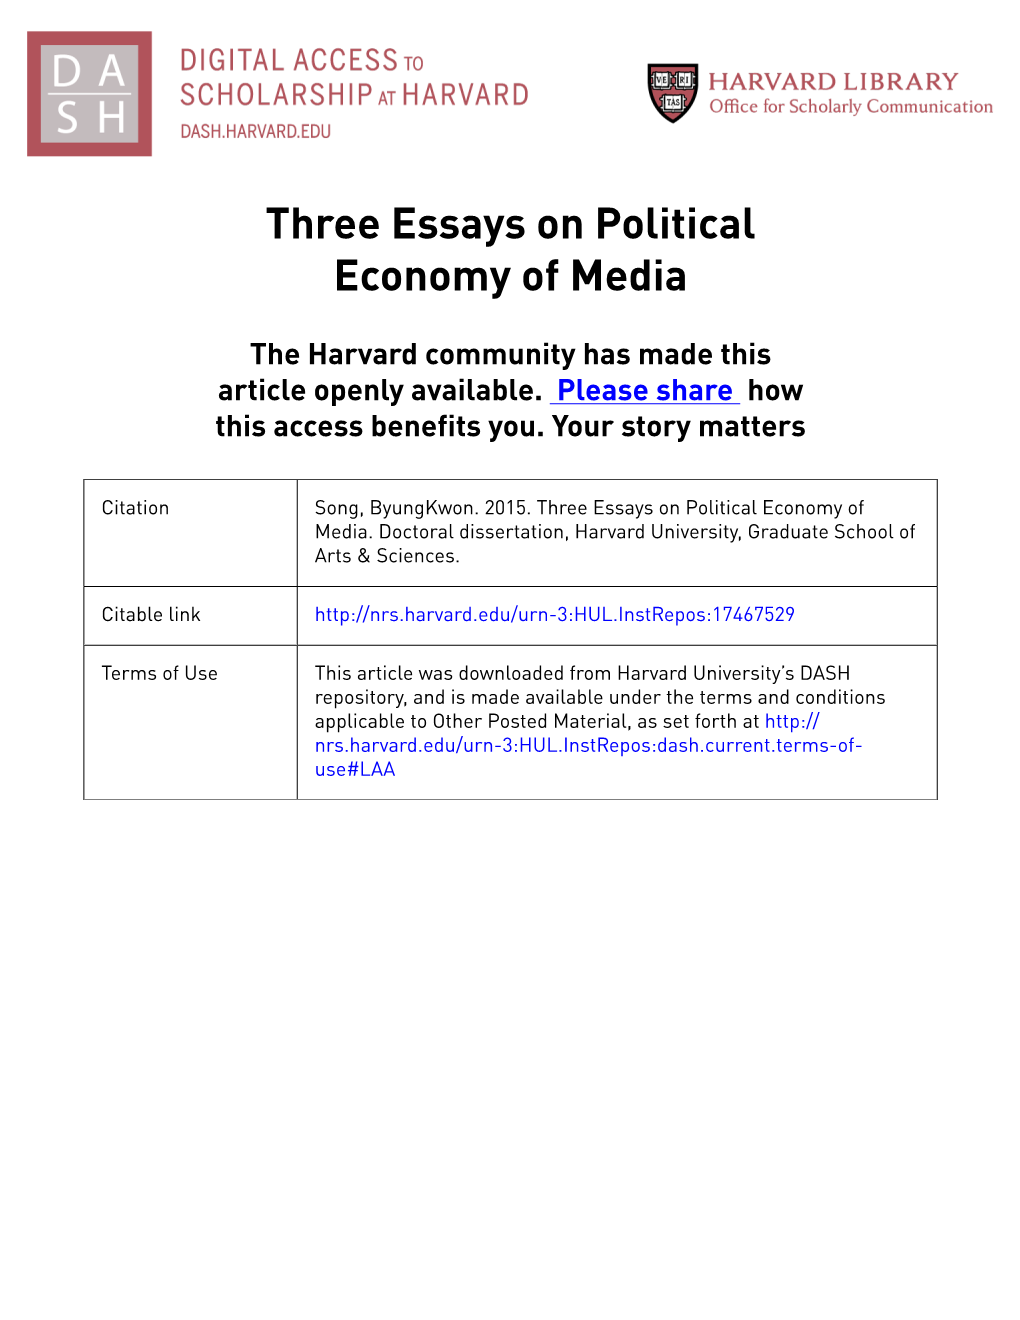 Three Essays on Political Economy of Media